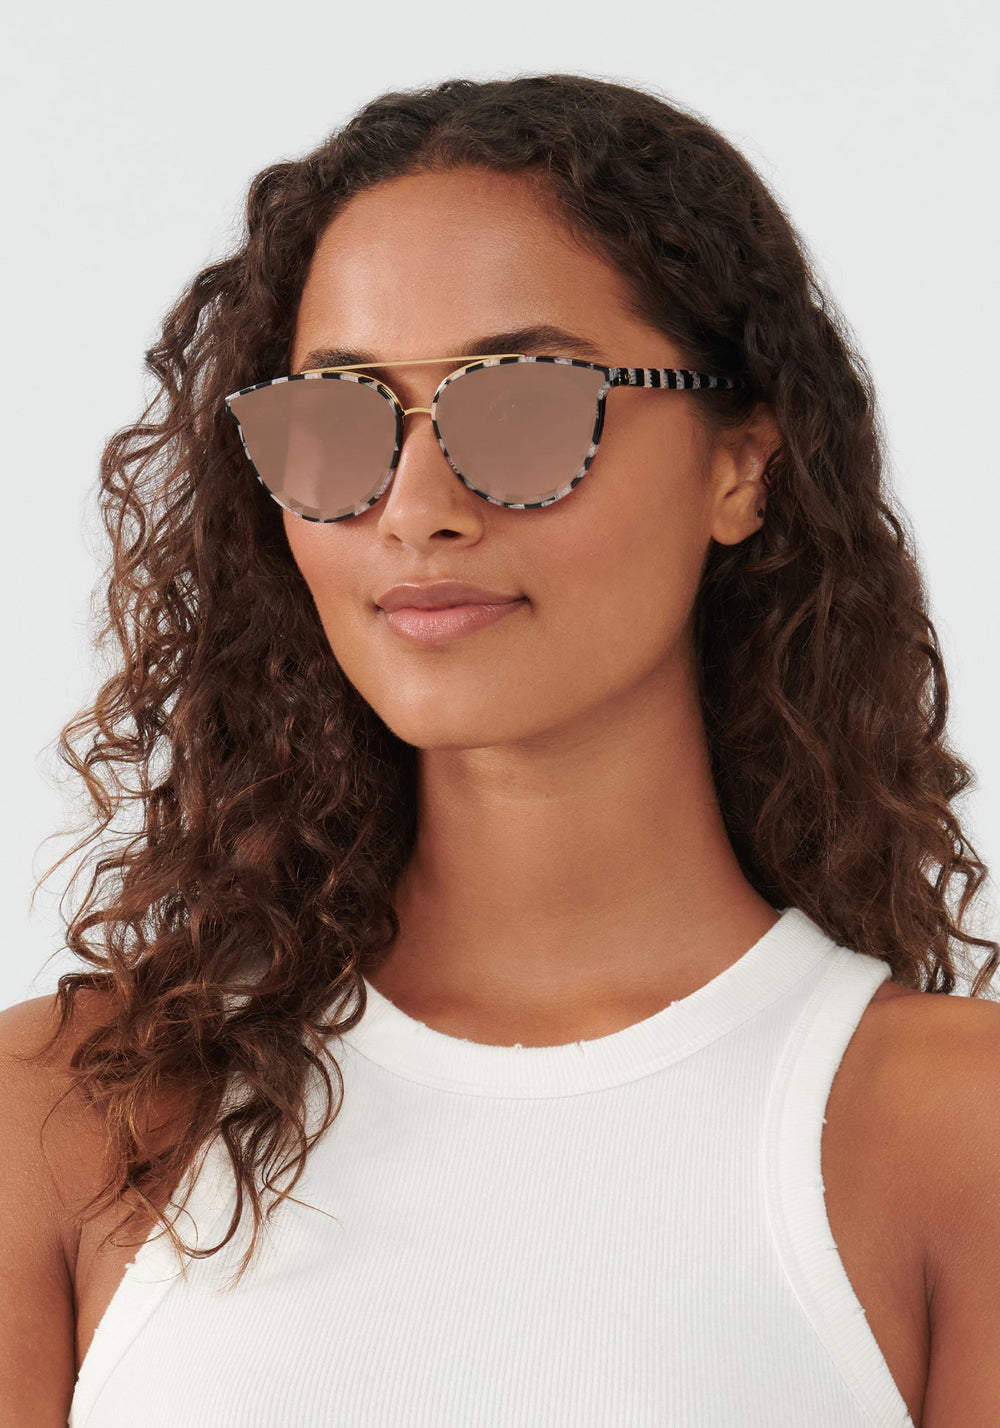 CLIO NYLON | Harlequin 18K Mirrored Handcrafted, Acetate Sunglasses womens model | Model: Meli